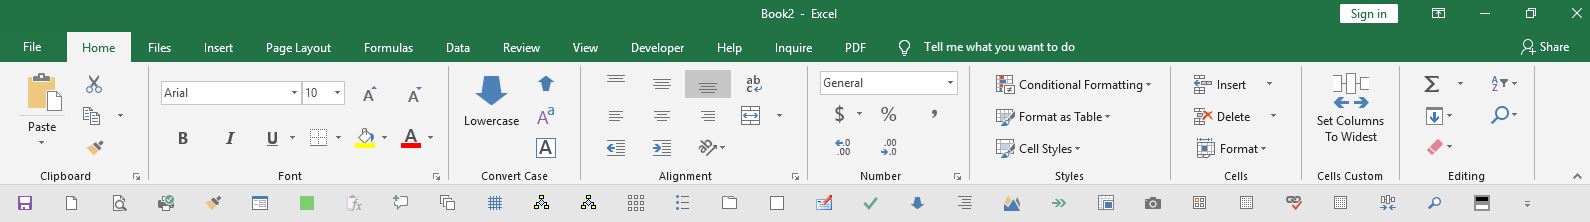 Excel Tool bar